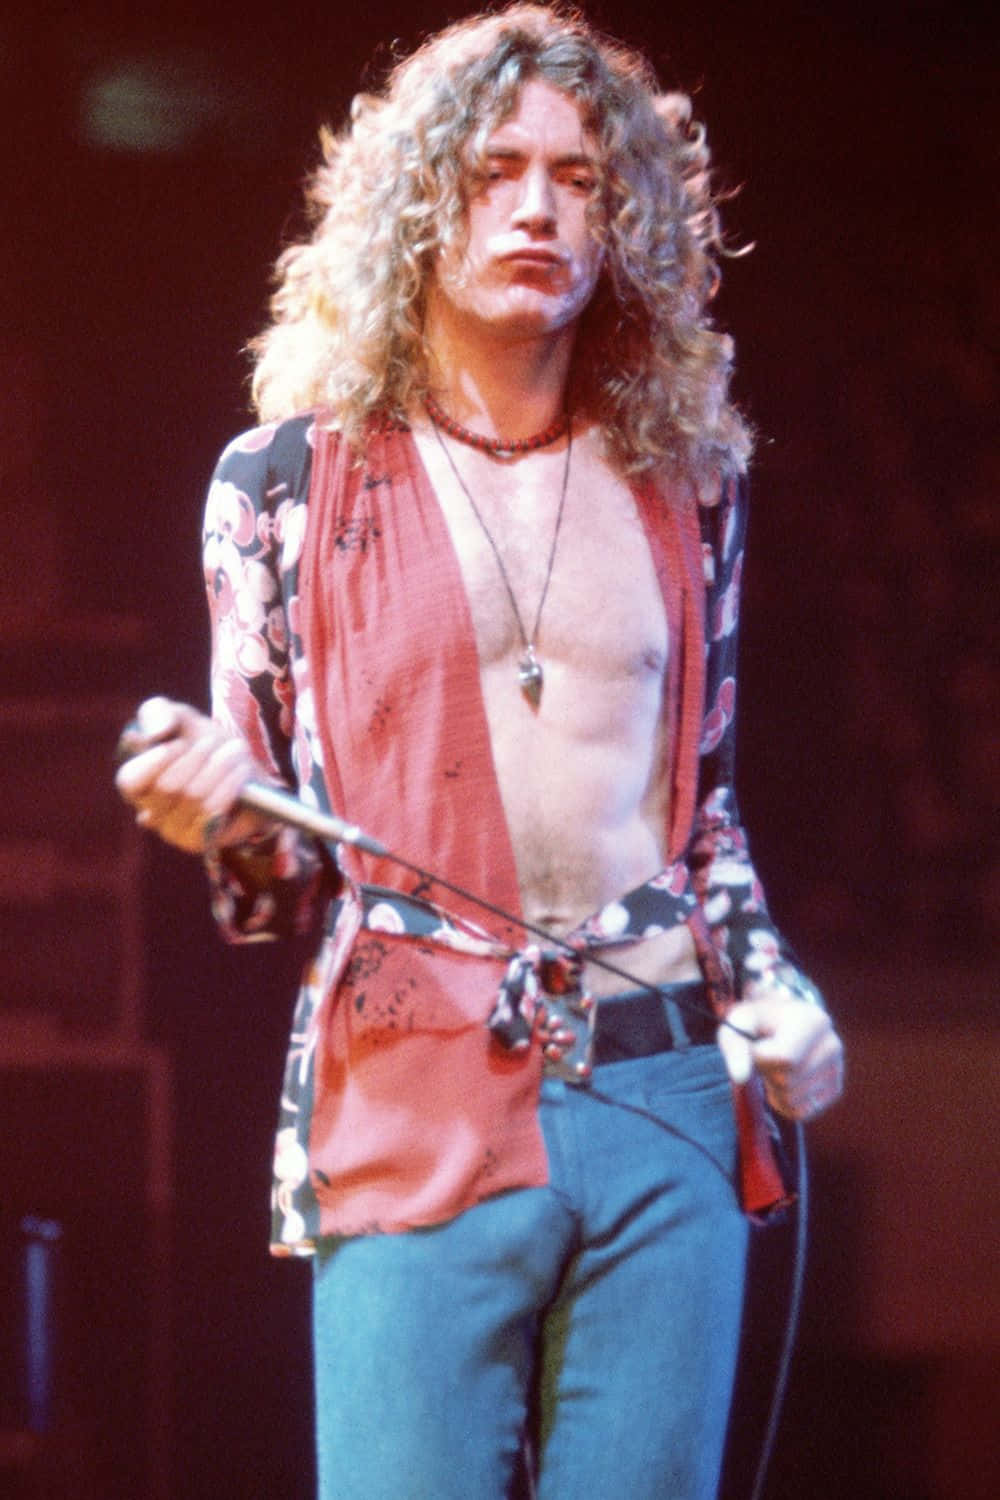 Músicolegendario Robert Plant